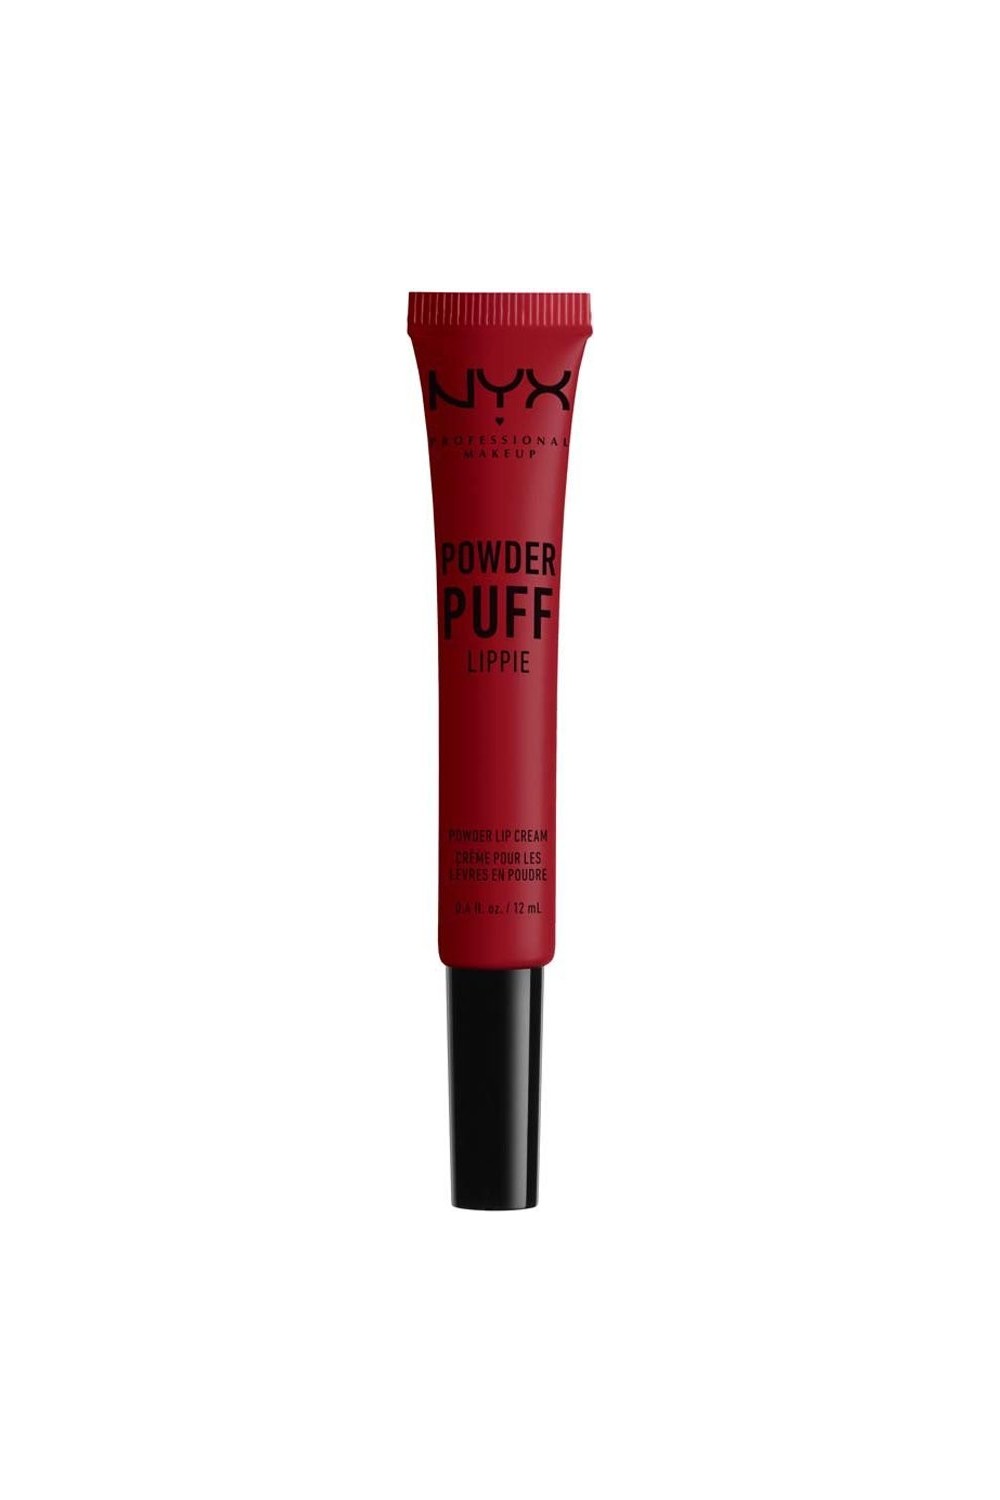 Nyx Professional Makeup - Powder Puff Lippie Lipstick - Group Love